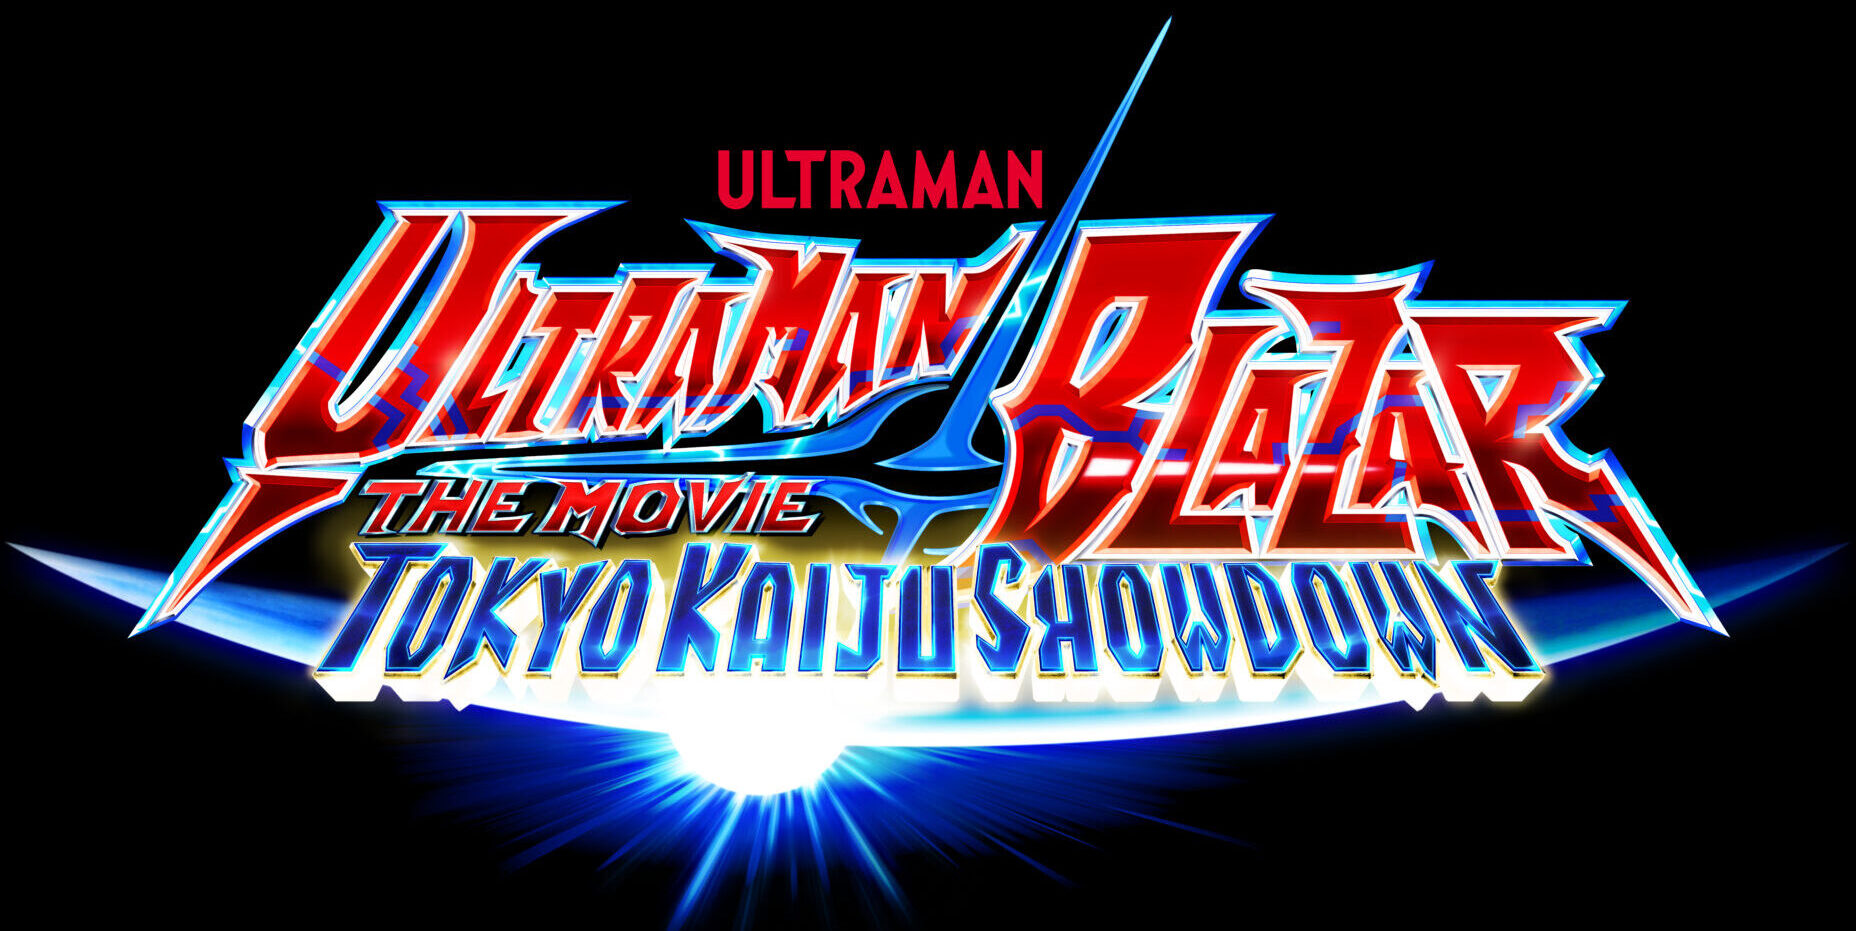 Ultraman Blazar The Movie: Tokyo Kaiju Showdown (2024)